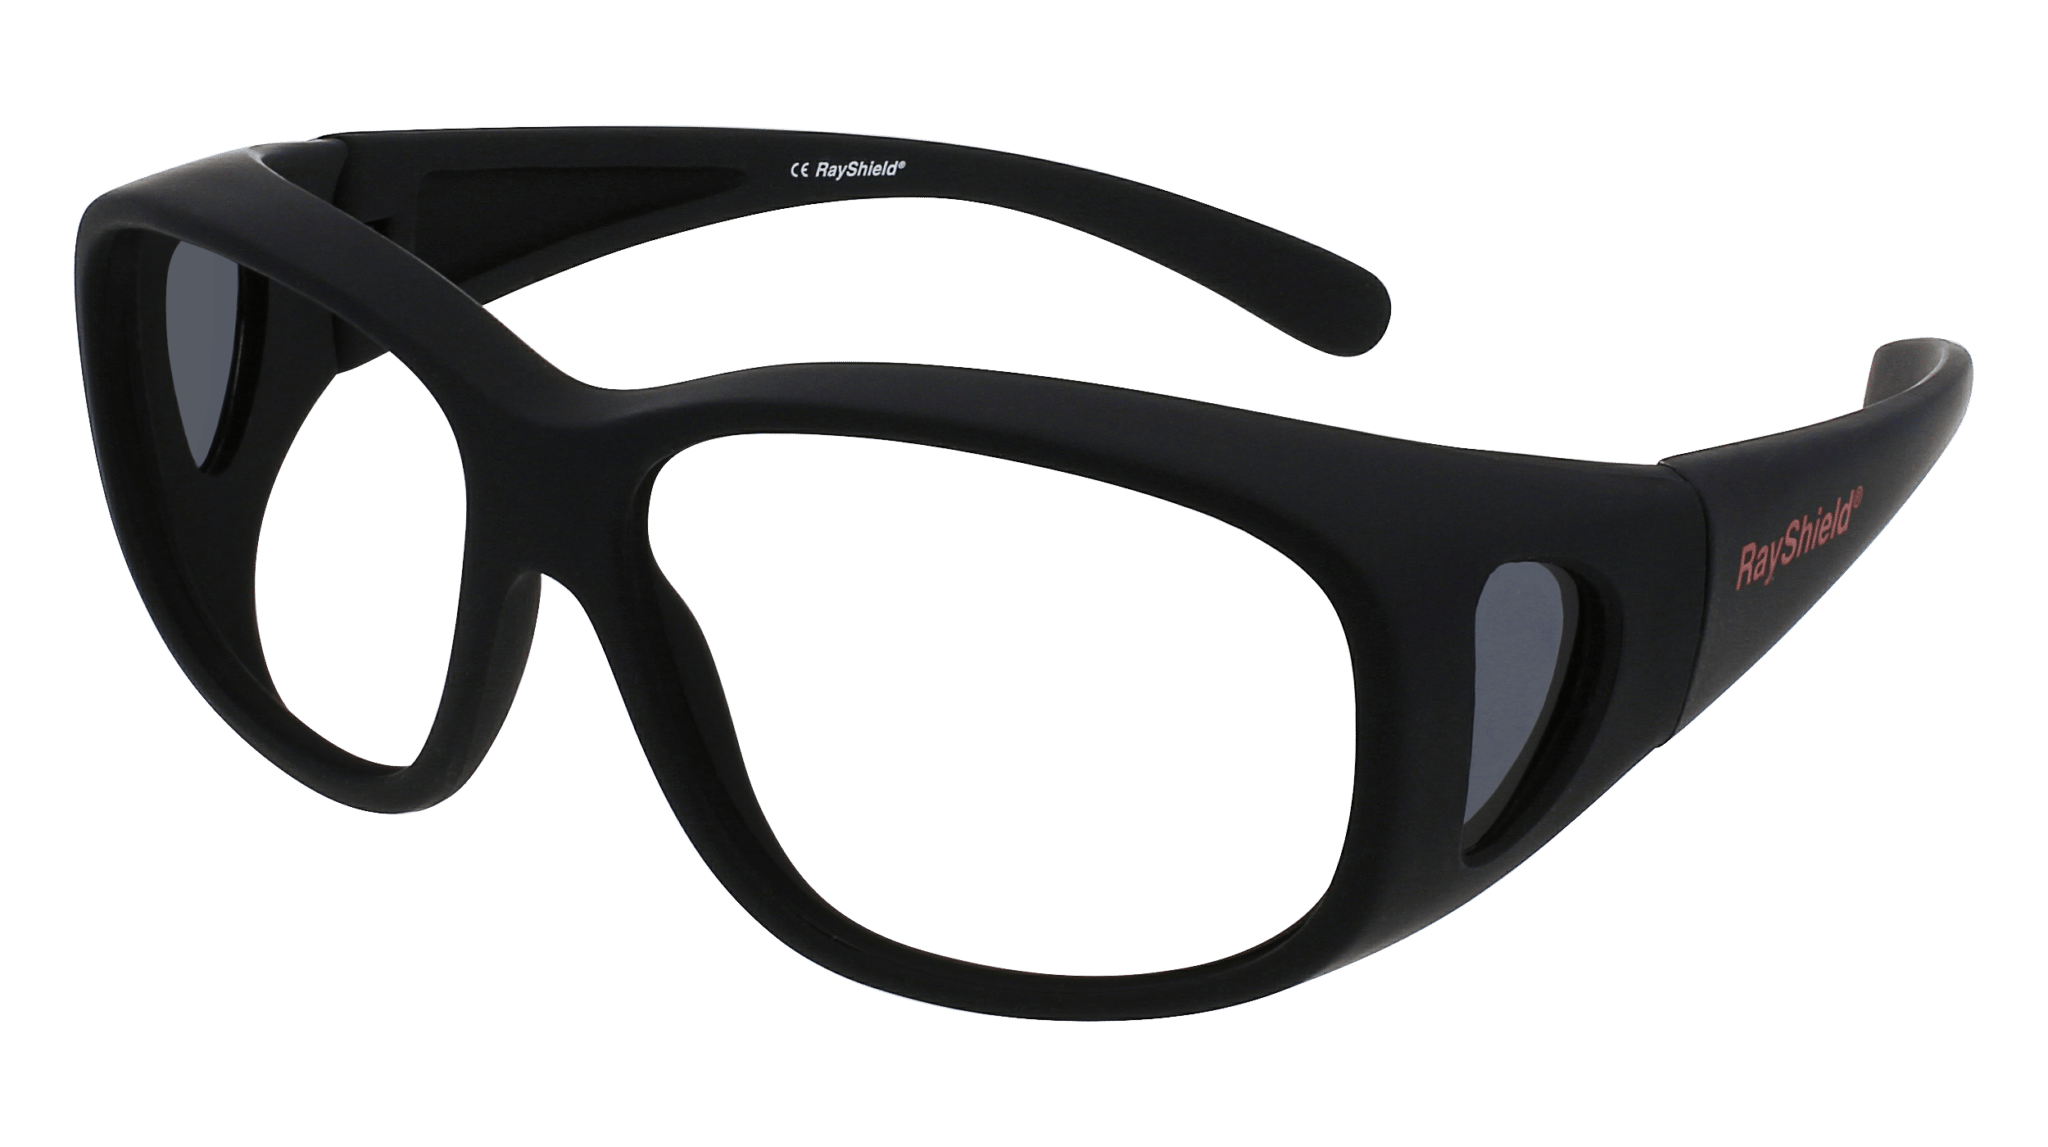 X-ray Protective Eyewear Lead Glasses Radiation Protection Eye